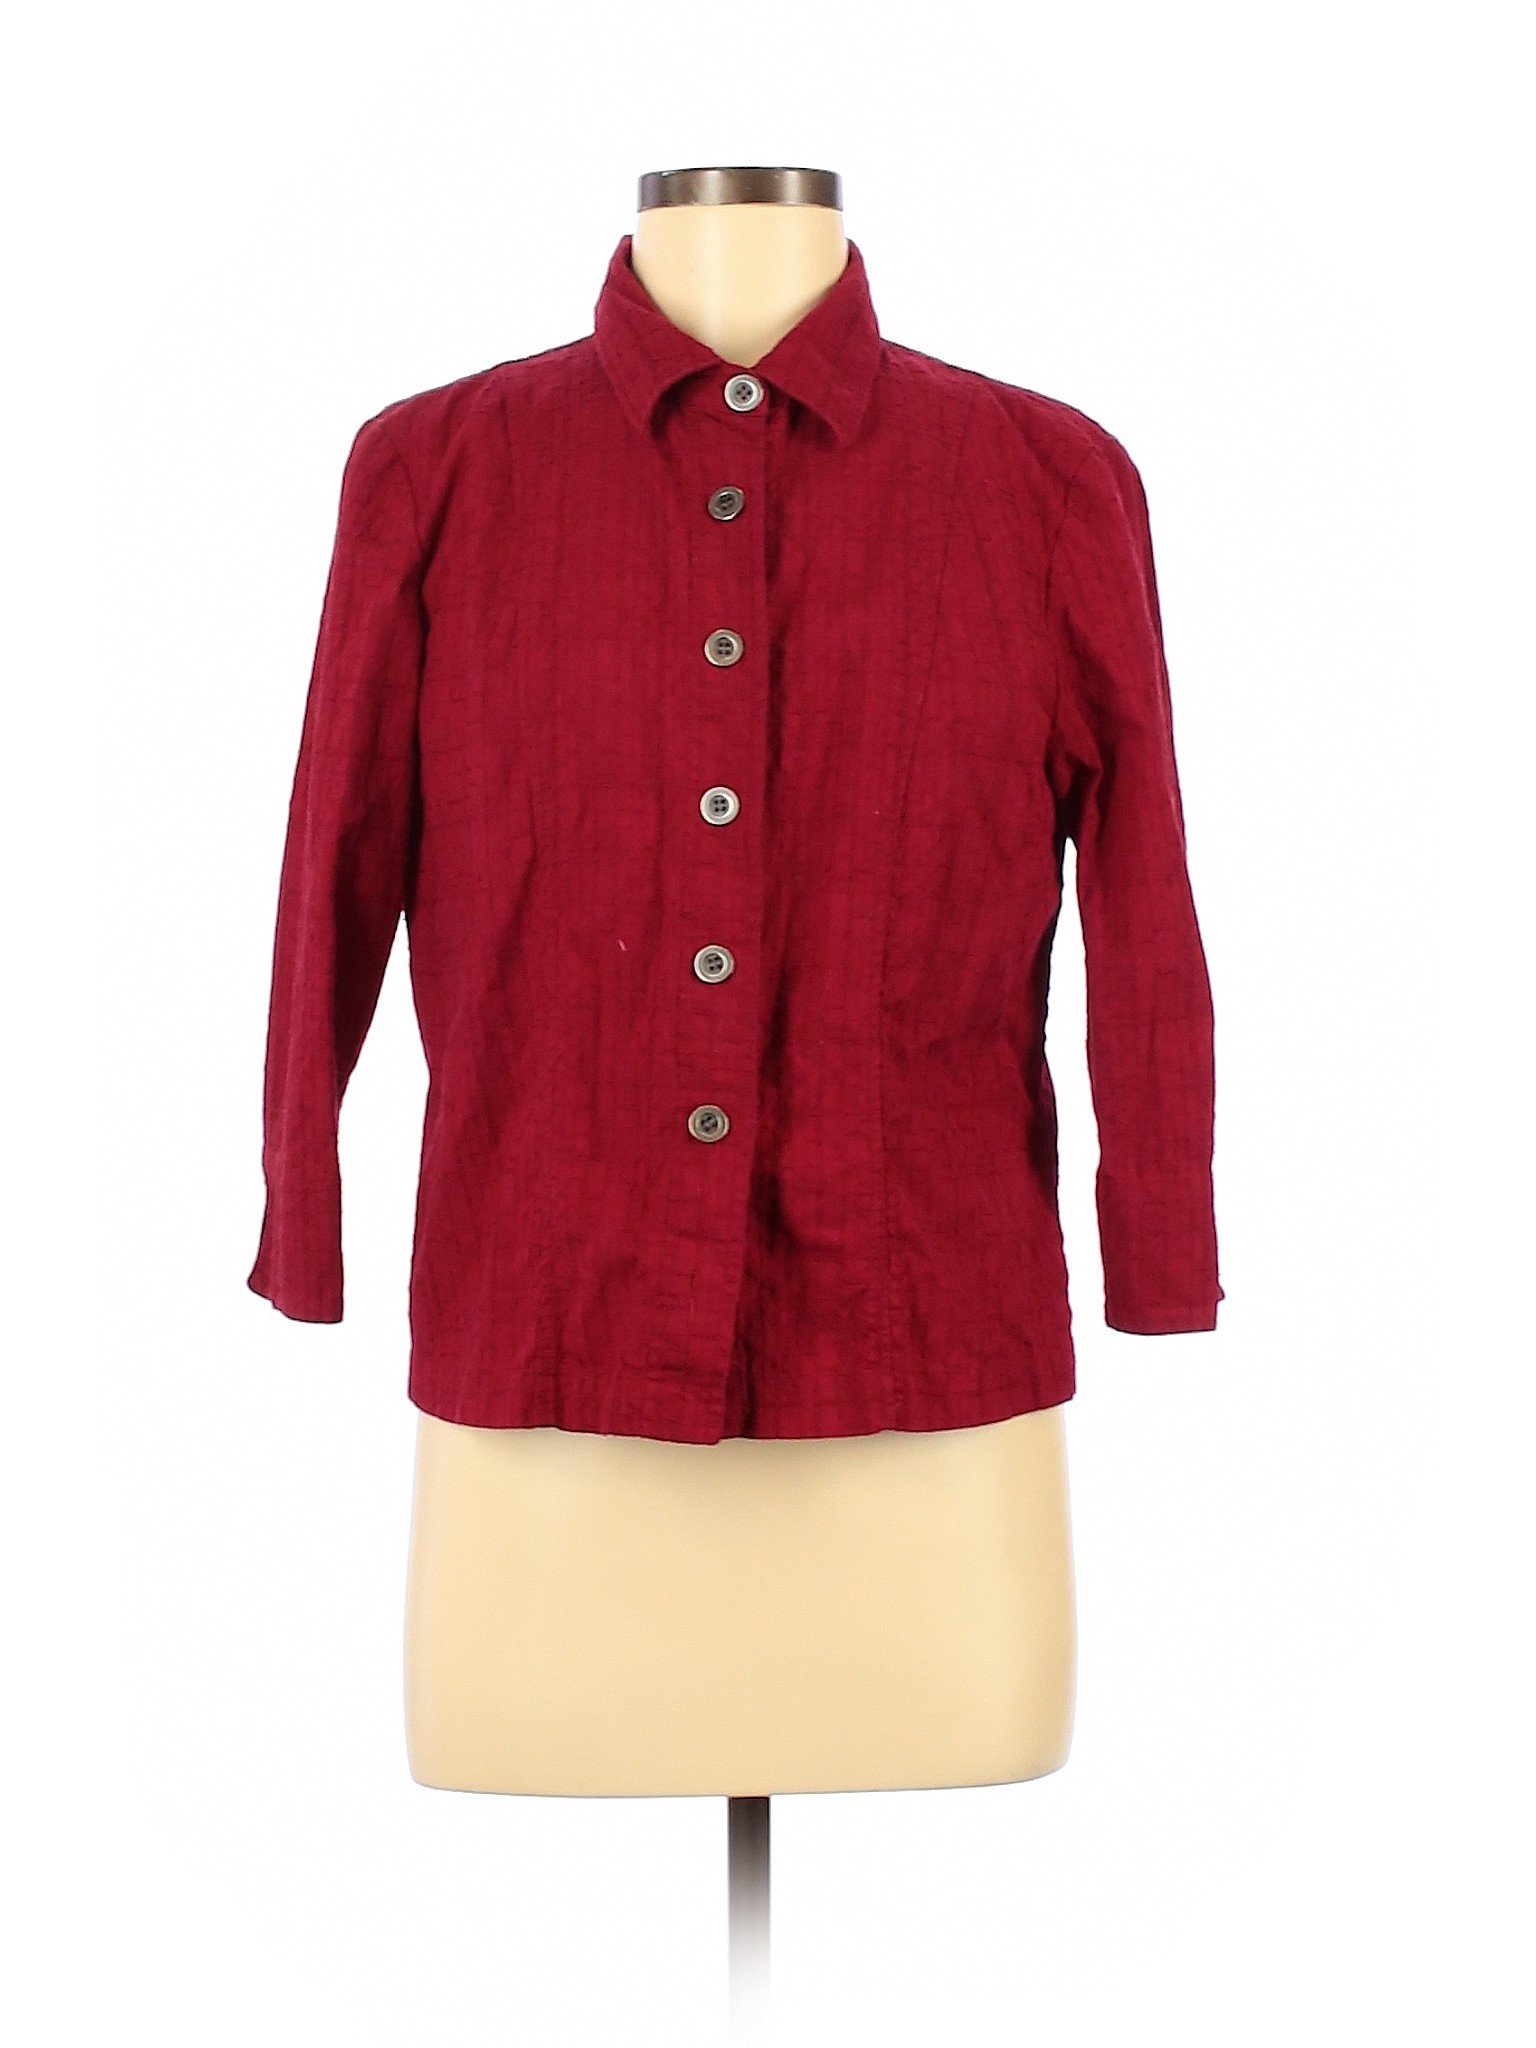 Christopher & Banks Women Red Jacket M Petites | eBay